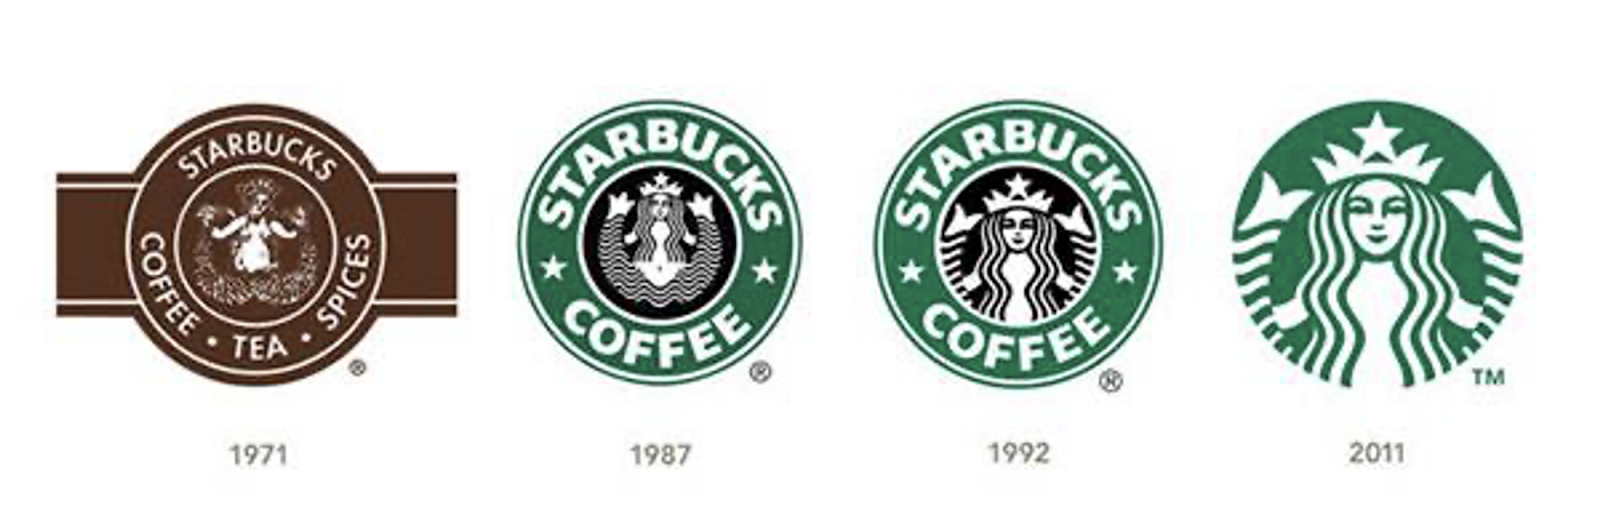 изменение логотипа Starbucks